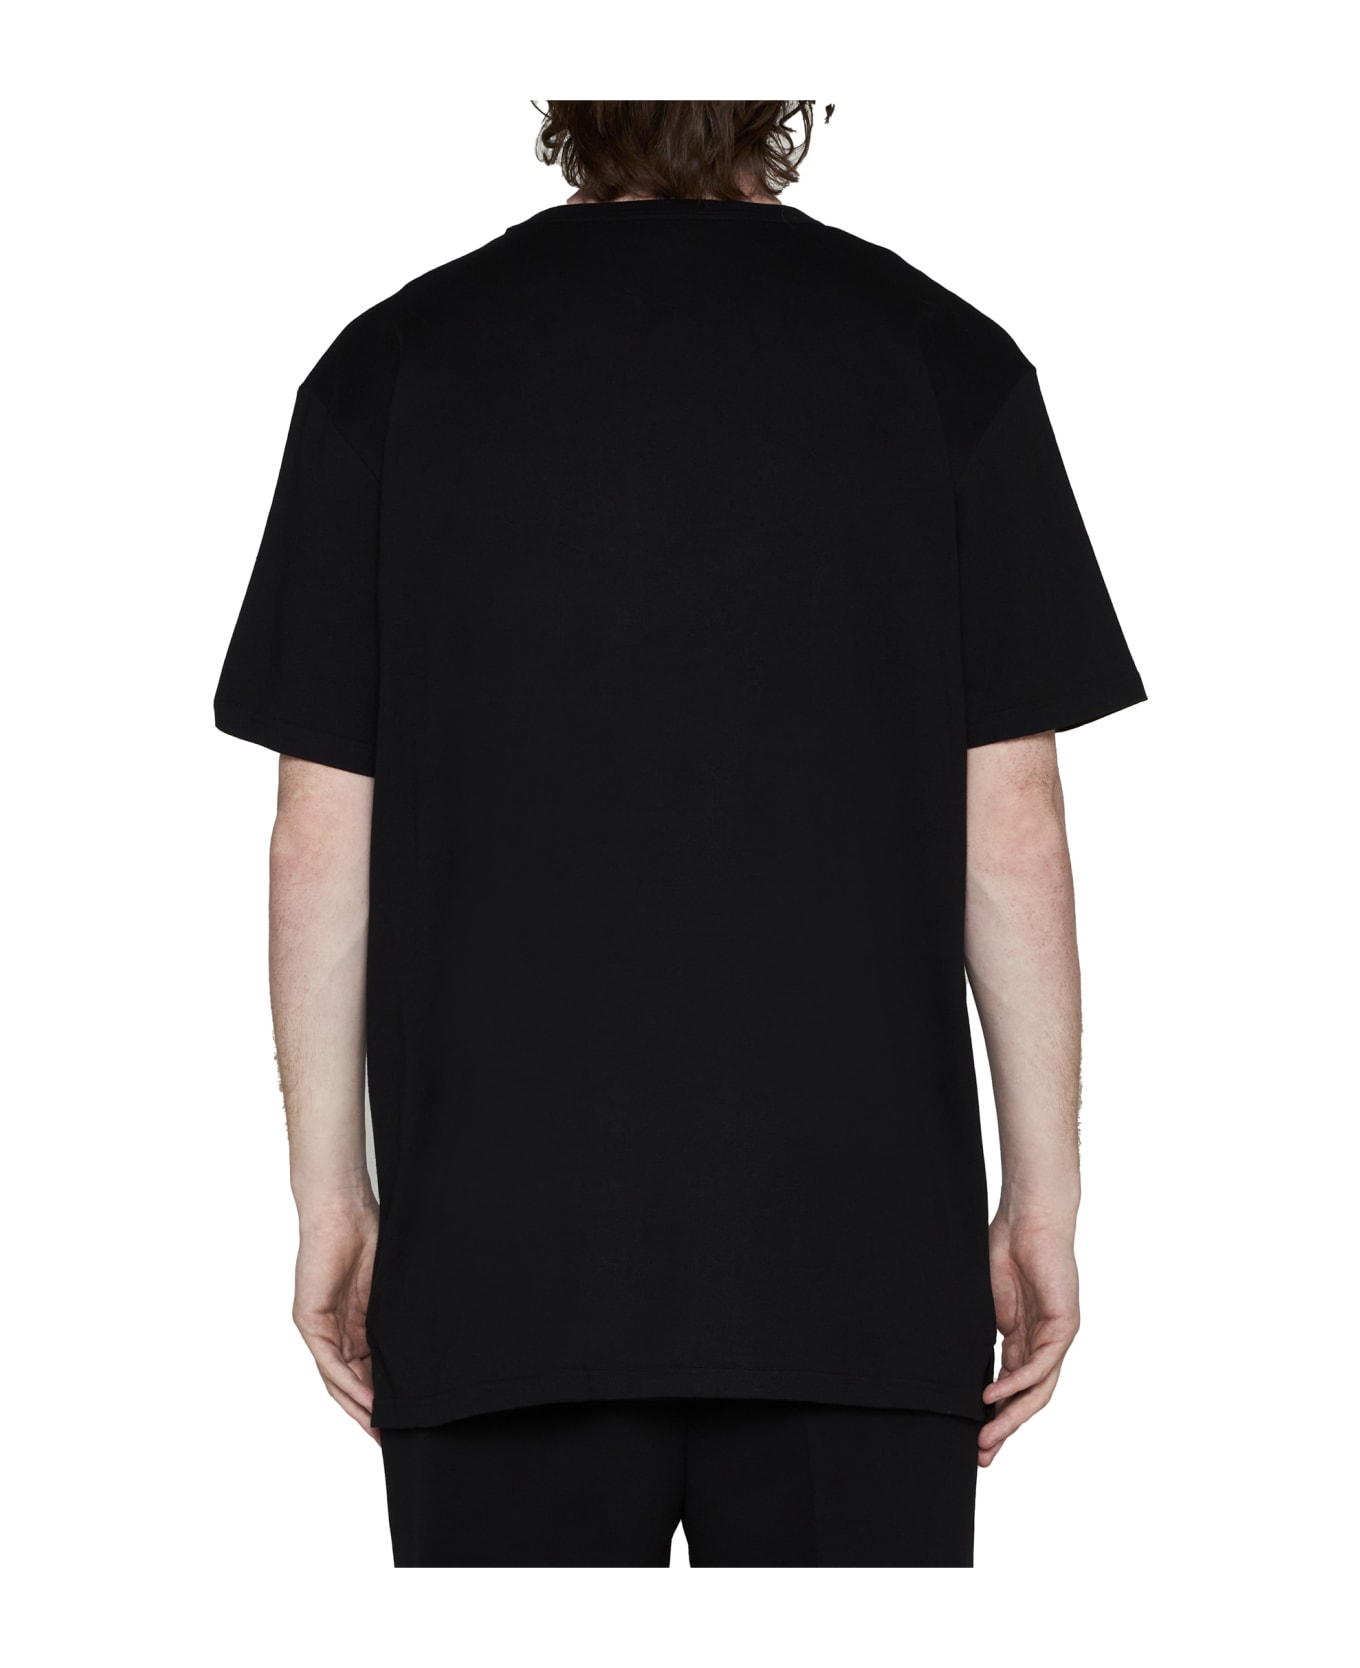 Alexander McQueen Skull Print T-shirt - Black mix